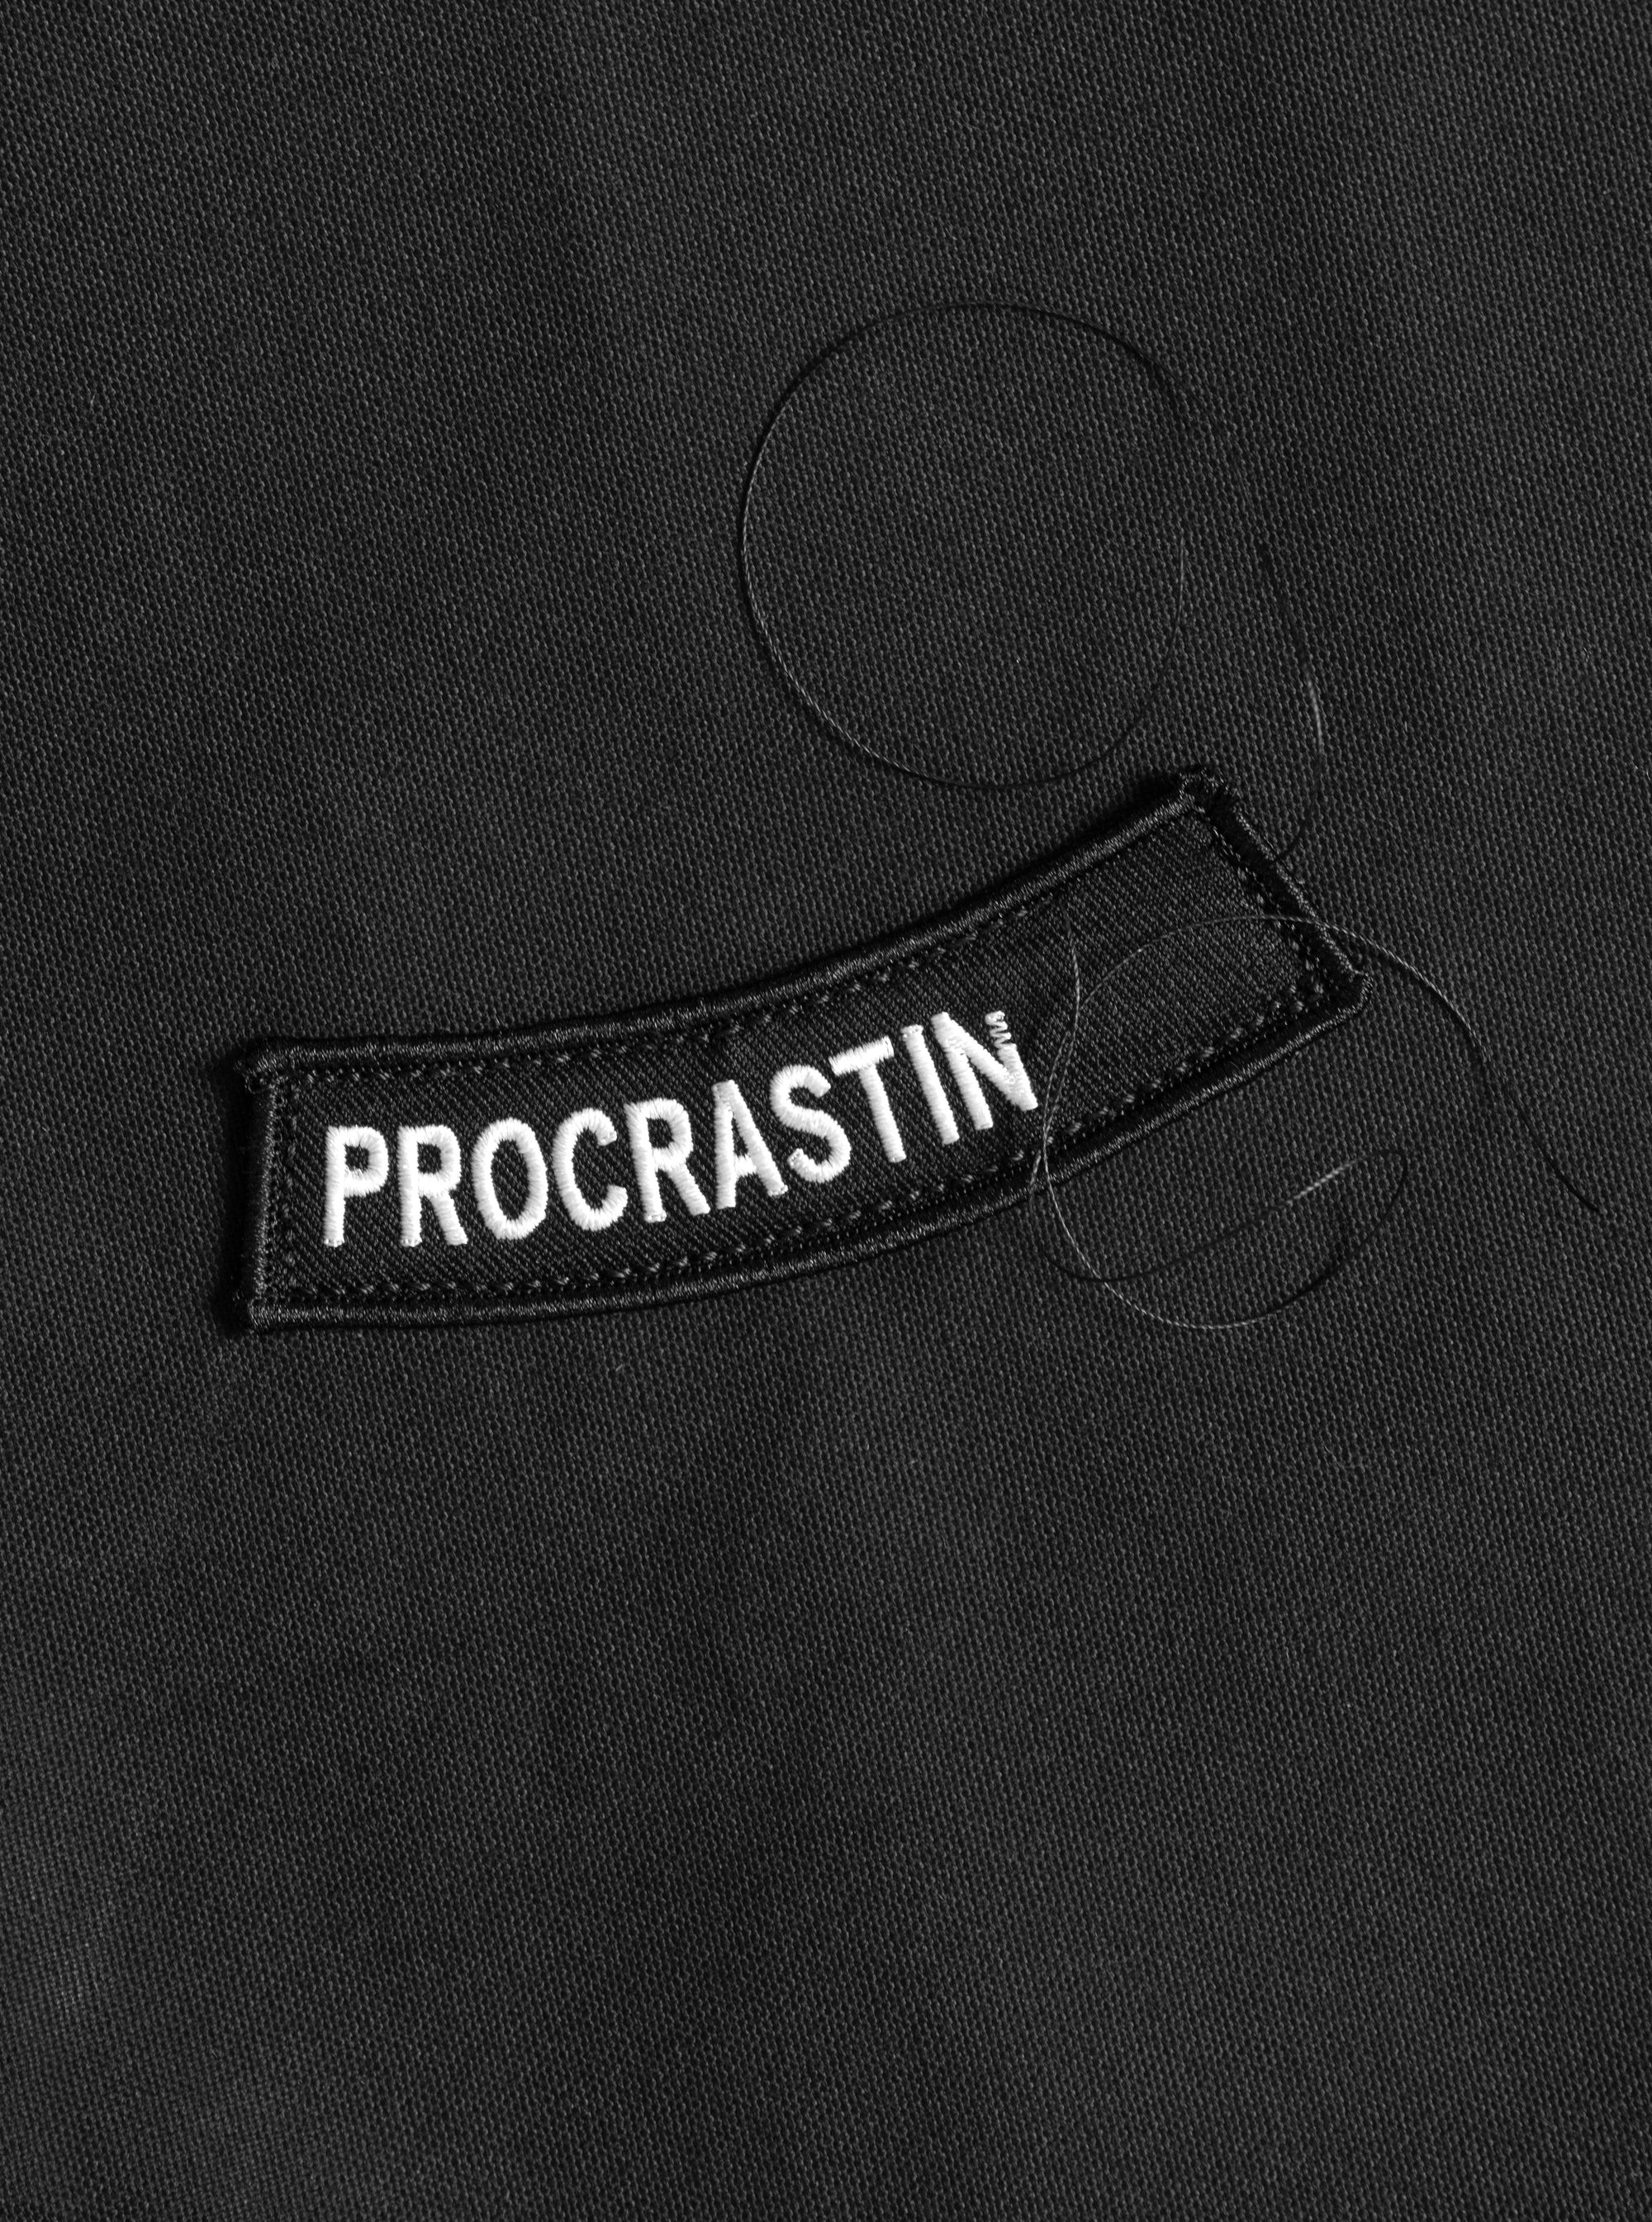 "Procrastinator" Patch